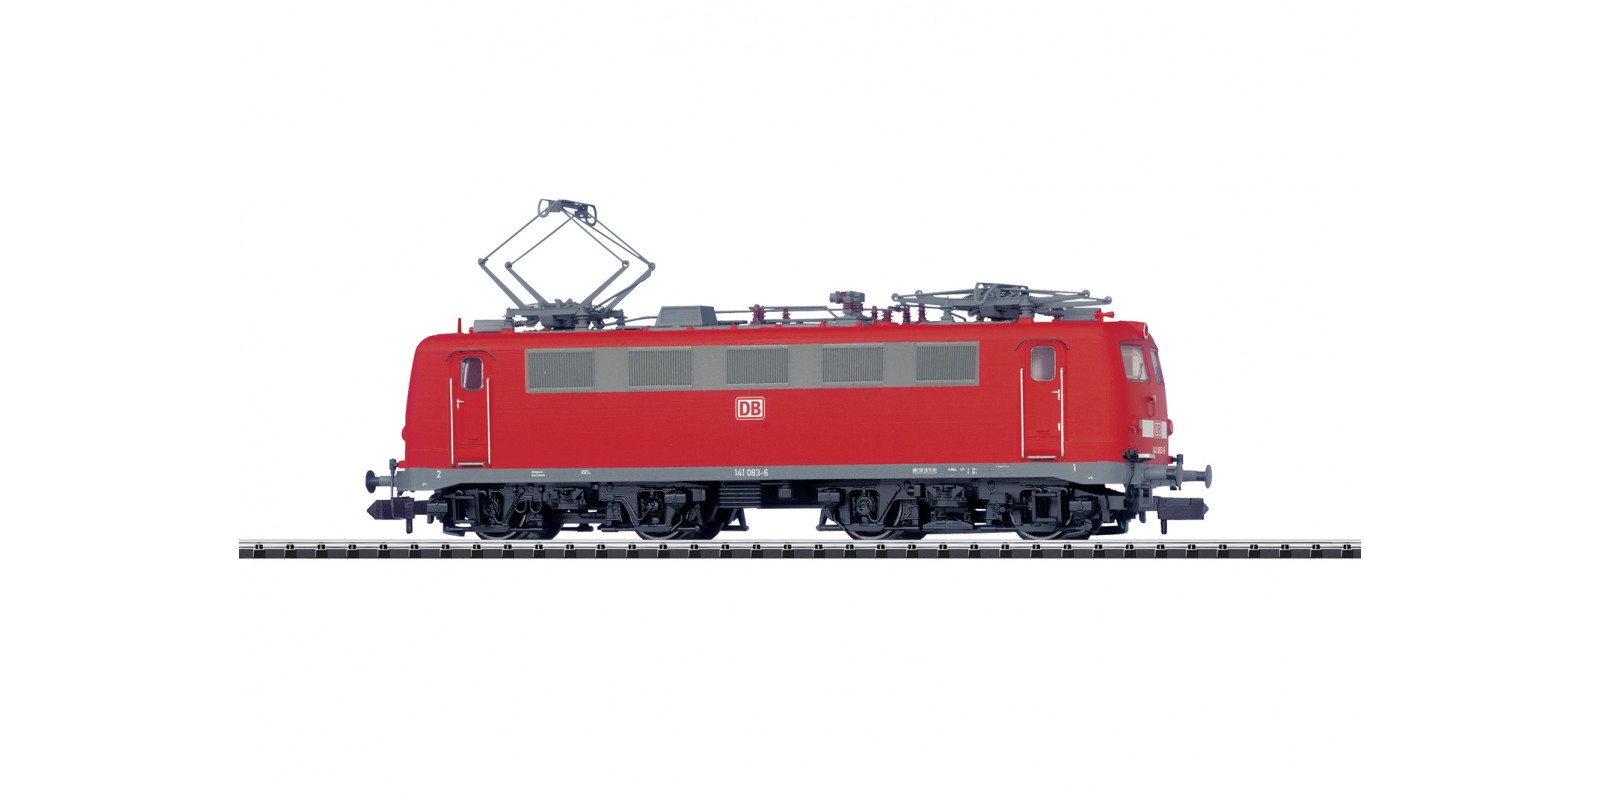 T16142 Class 141 Electric Locomotive